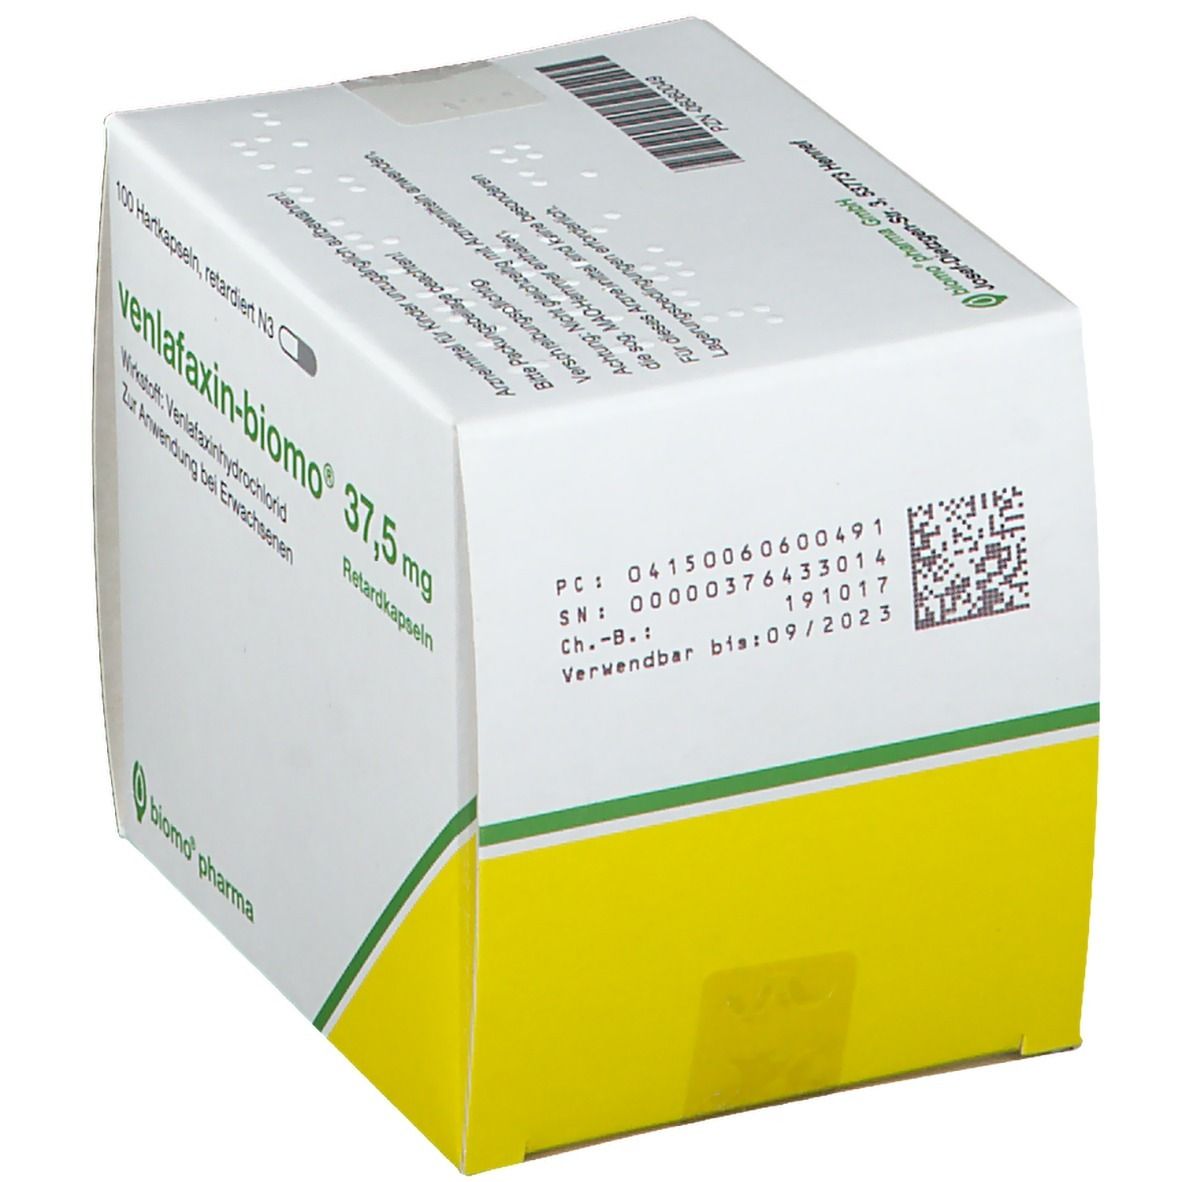 venlafaxin-biomo® 37,5 mg